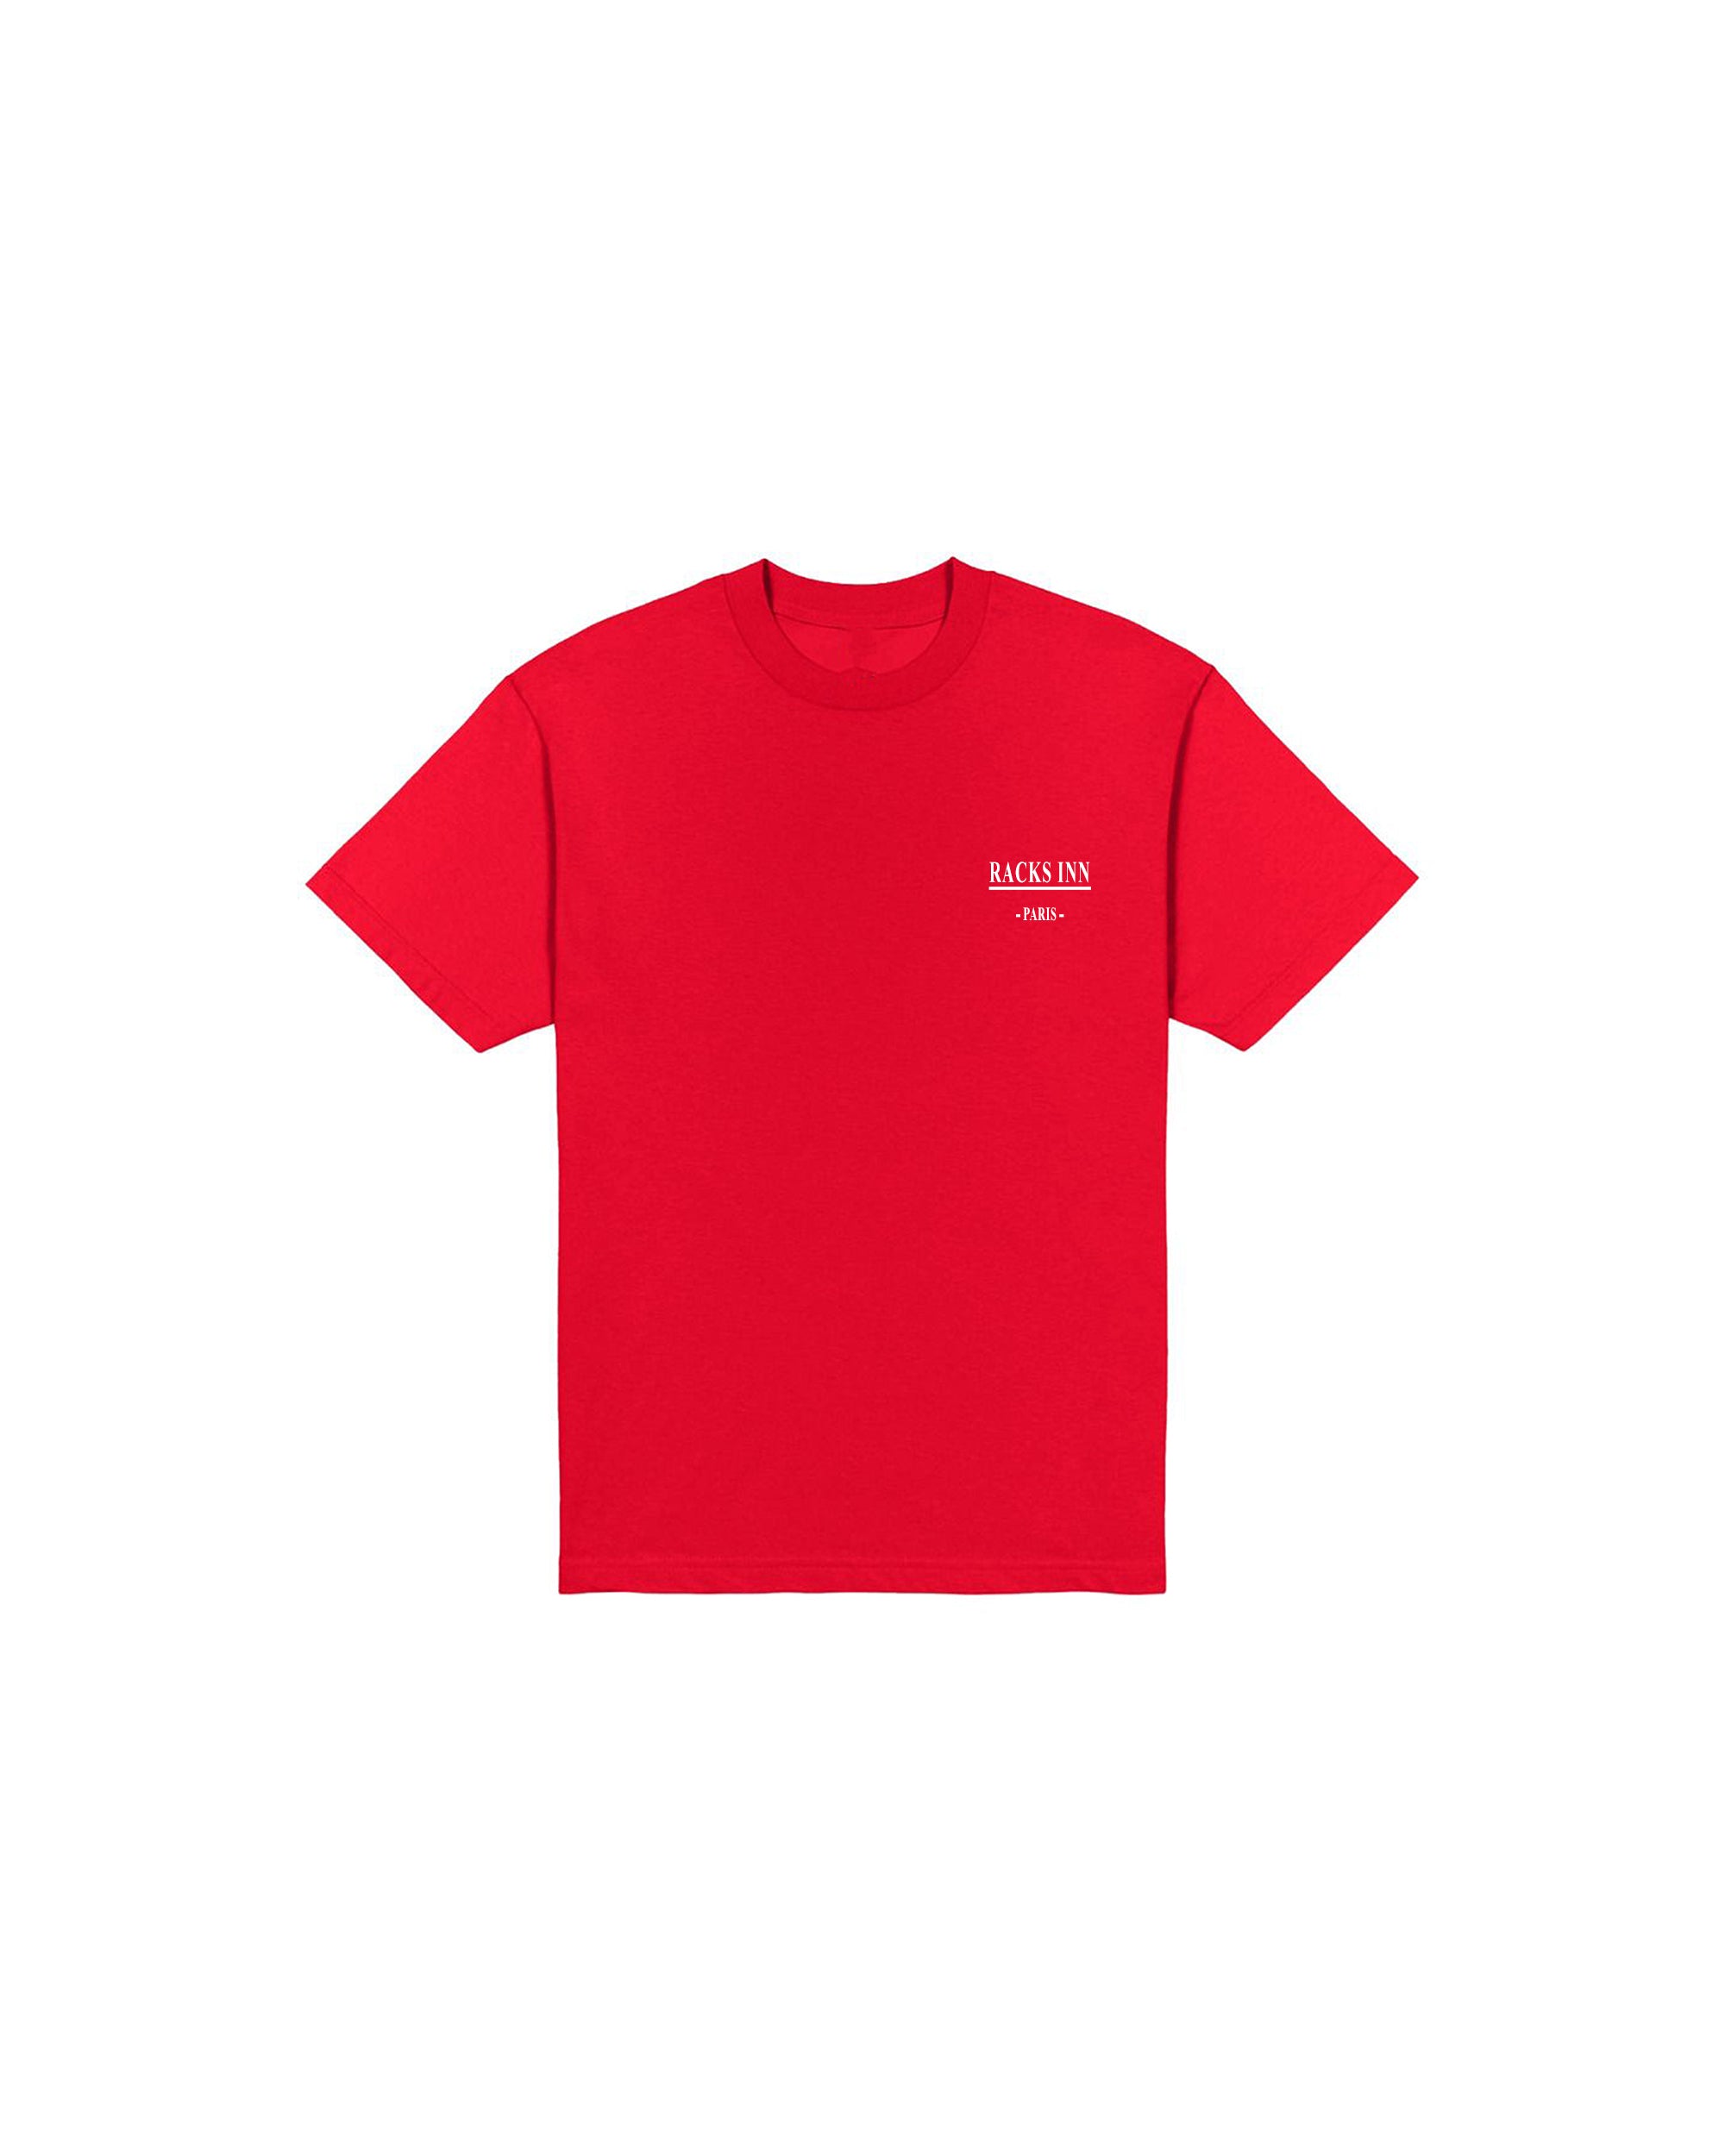 Paris T-Shirt - Red